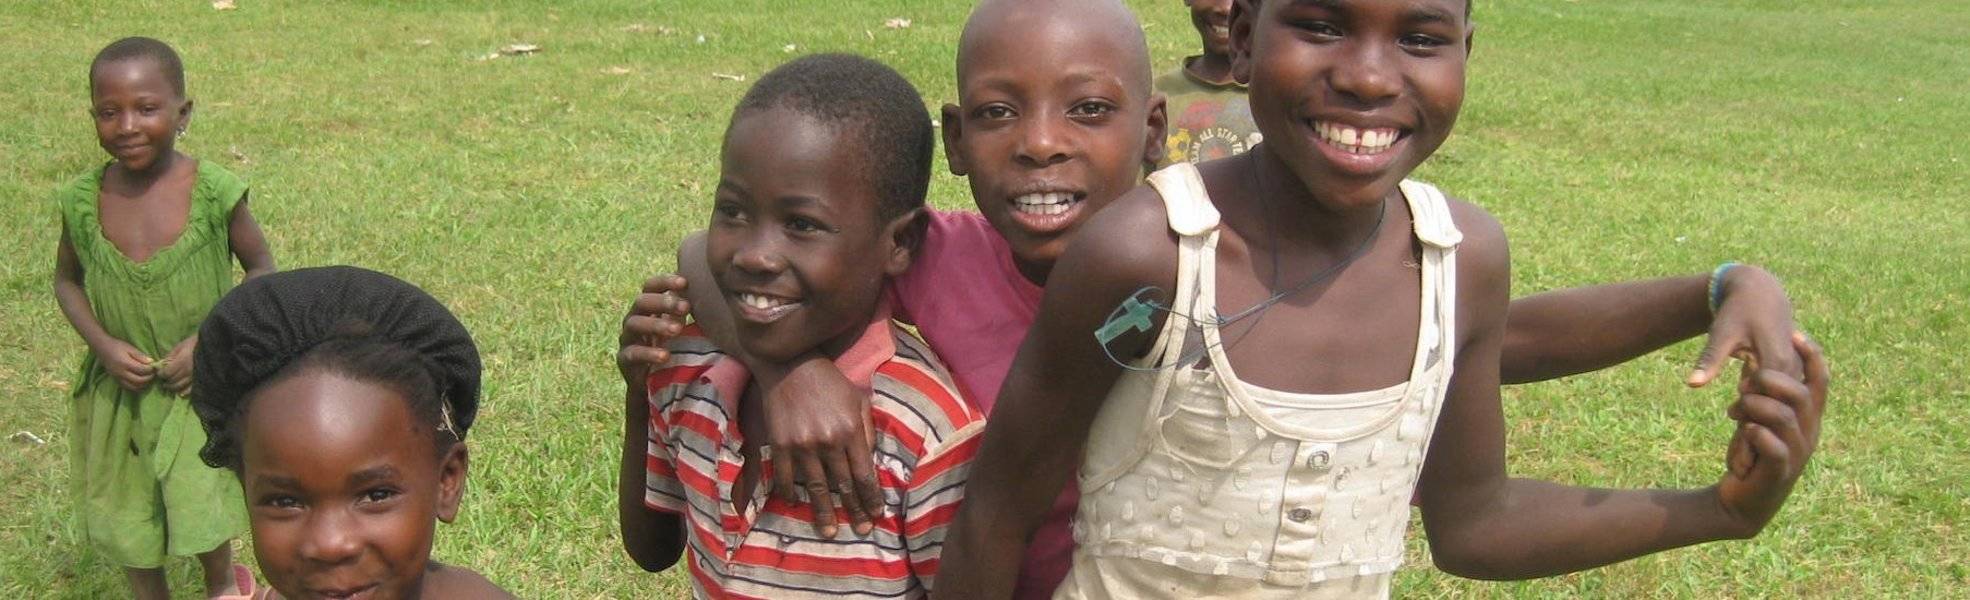 Volunteering at the Children's Center in Uganda